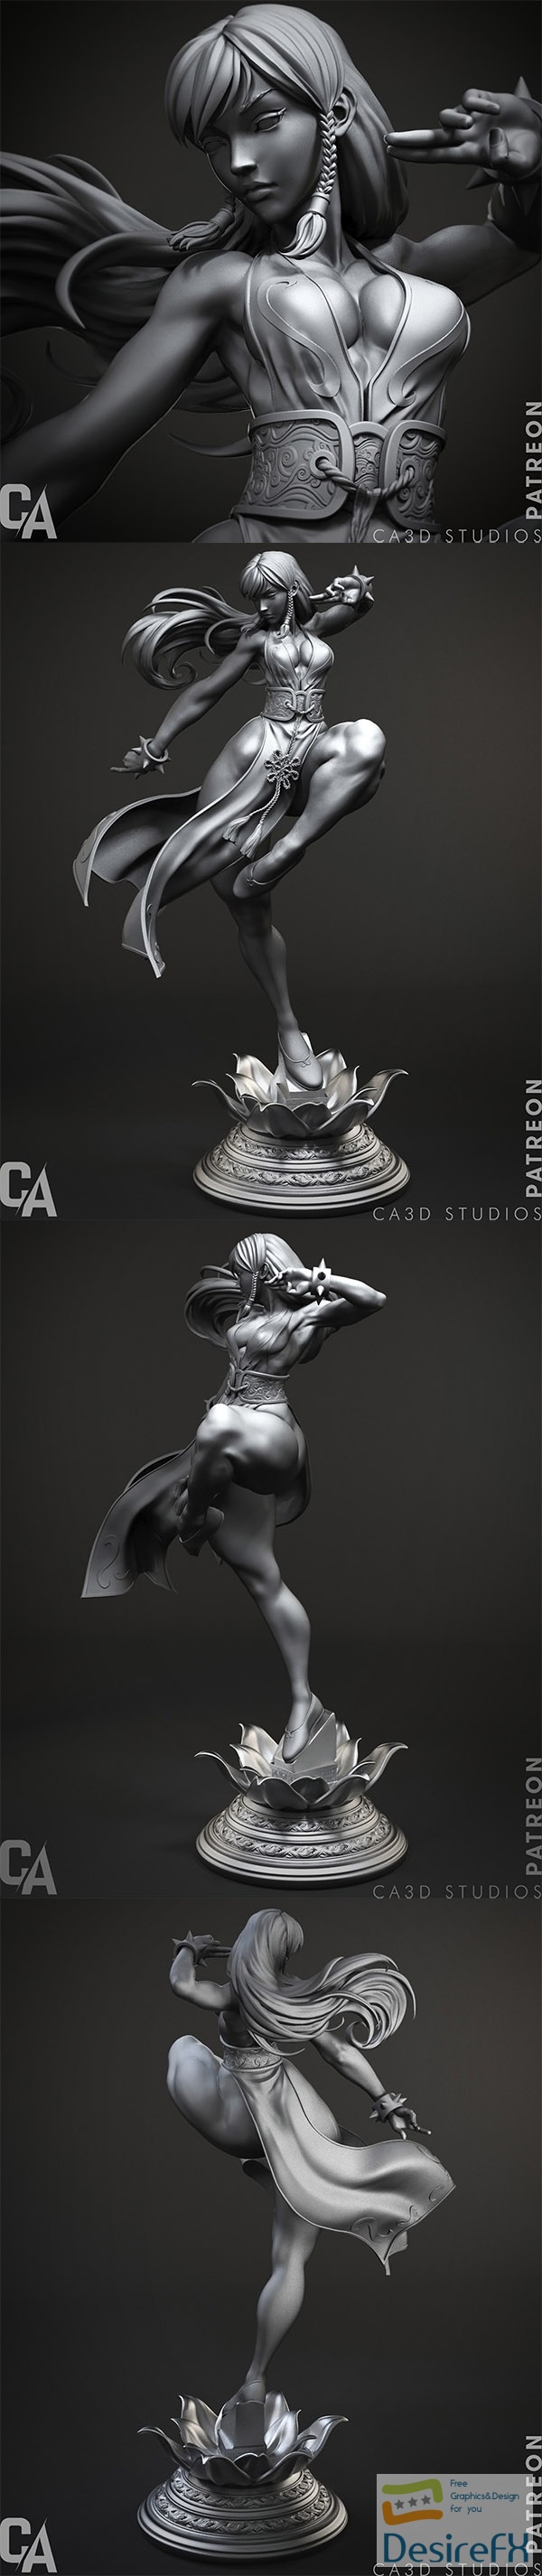 Ca 3d Studios – Chun-Li – 3D Print